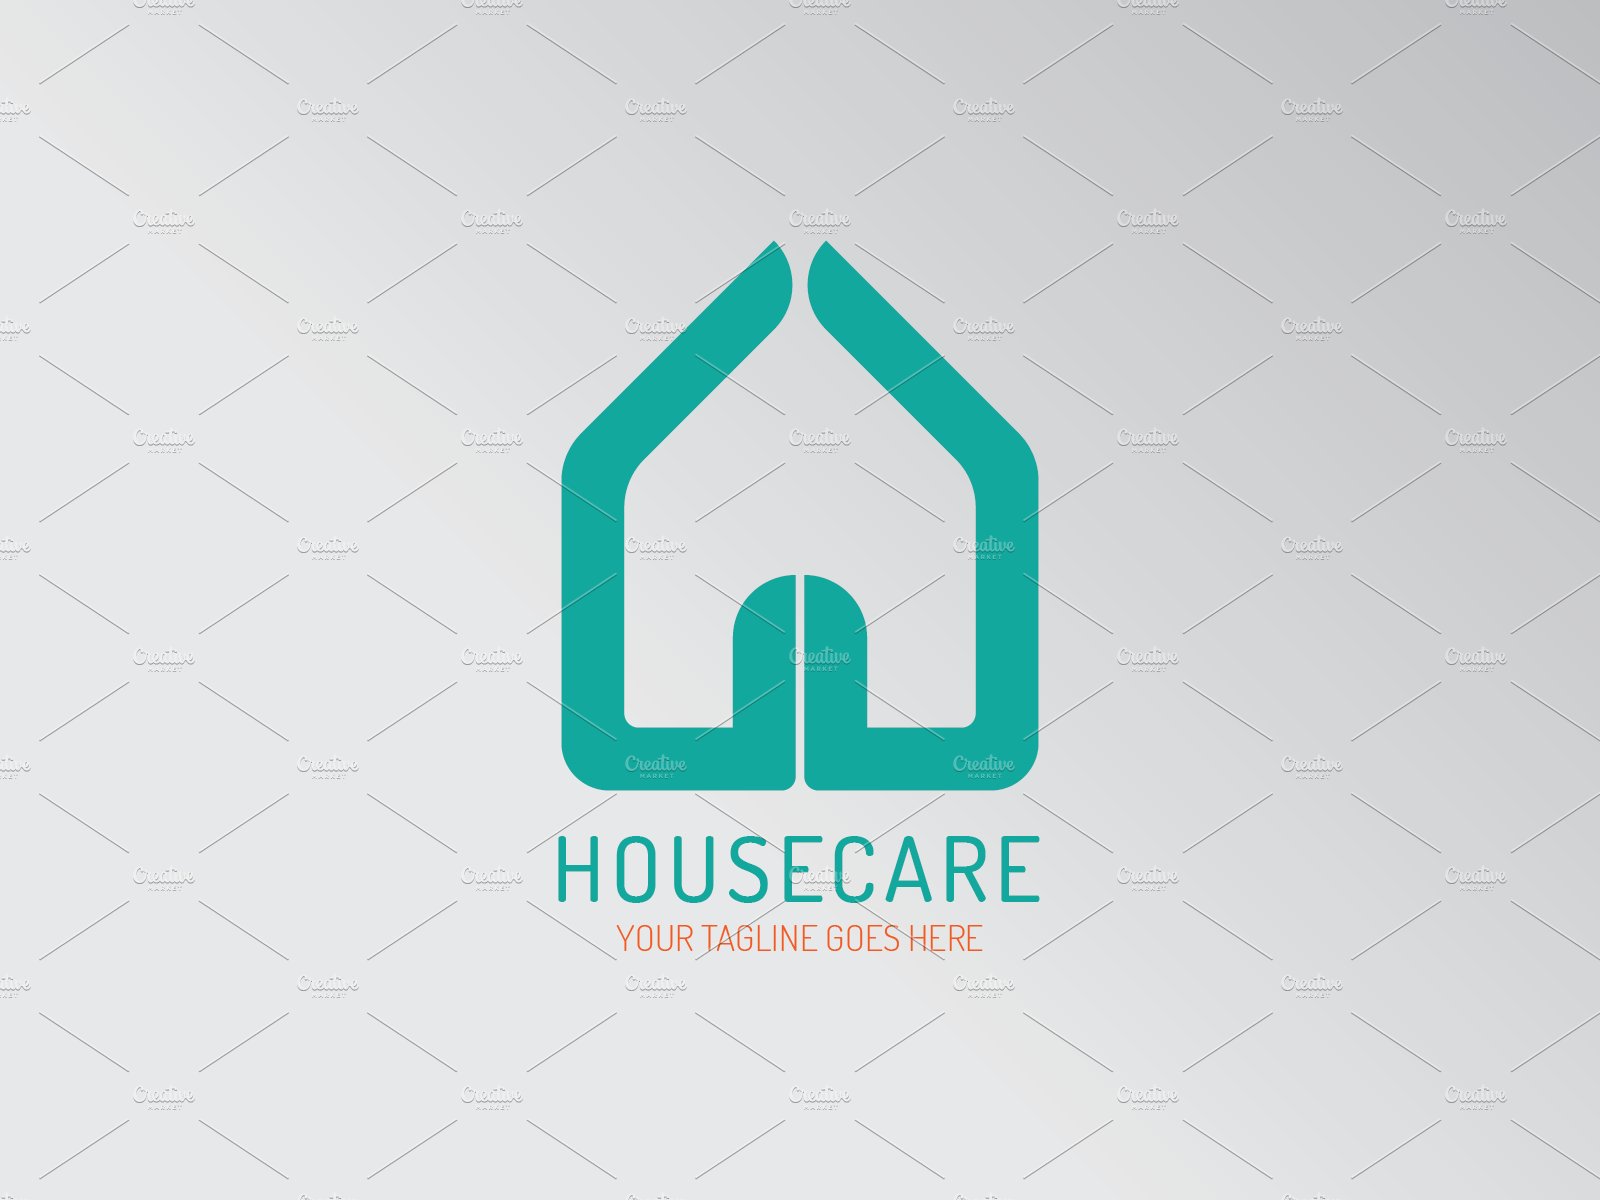 housecare template 03 867